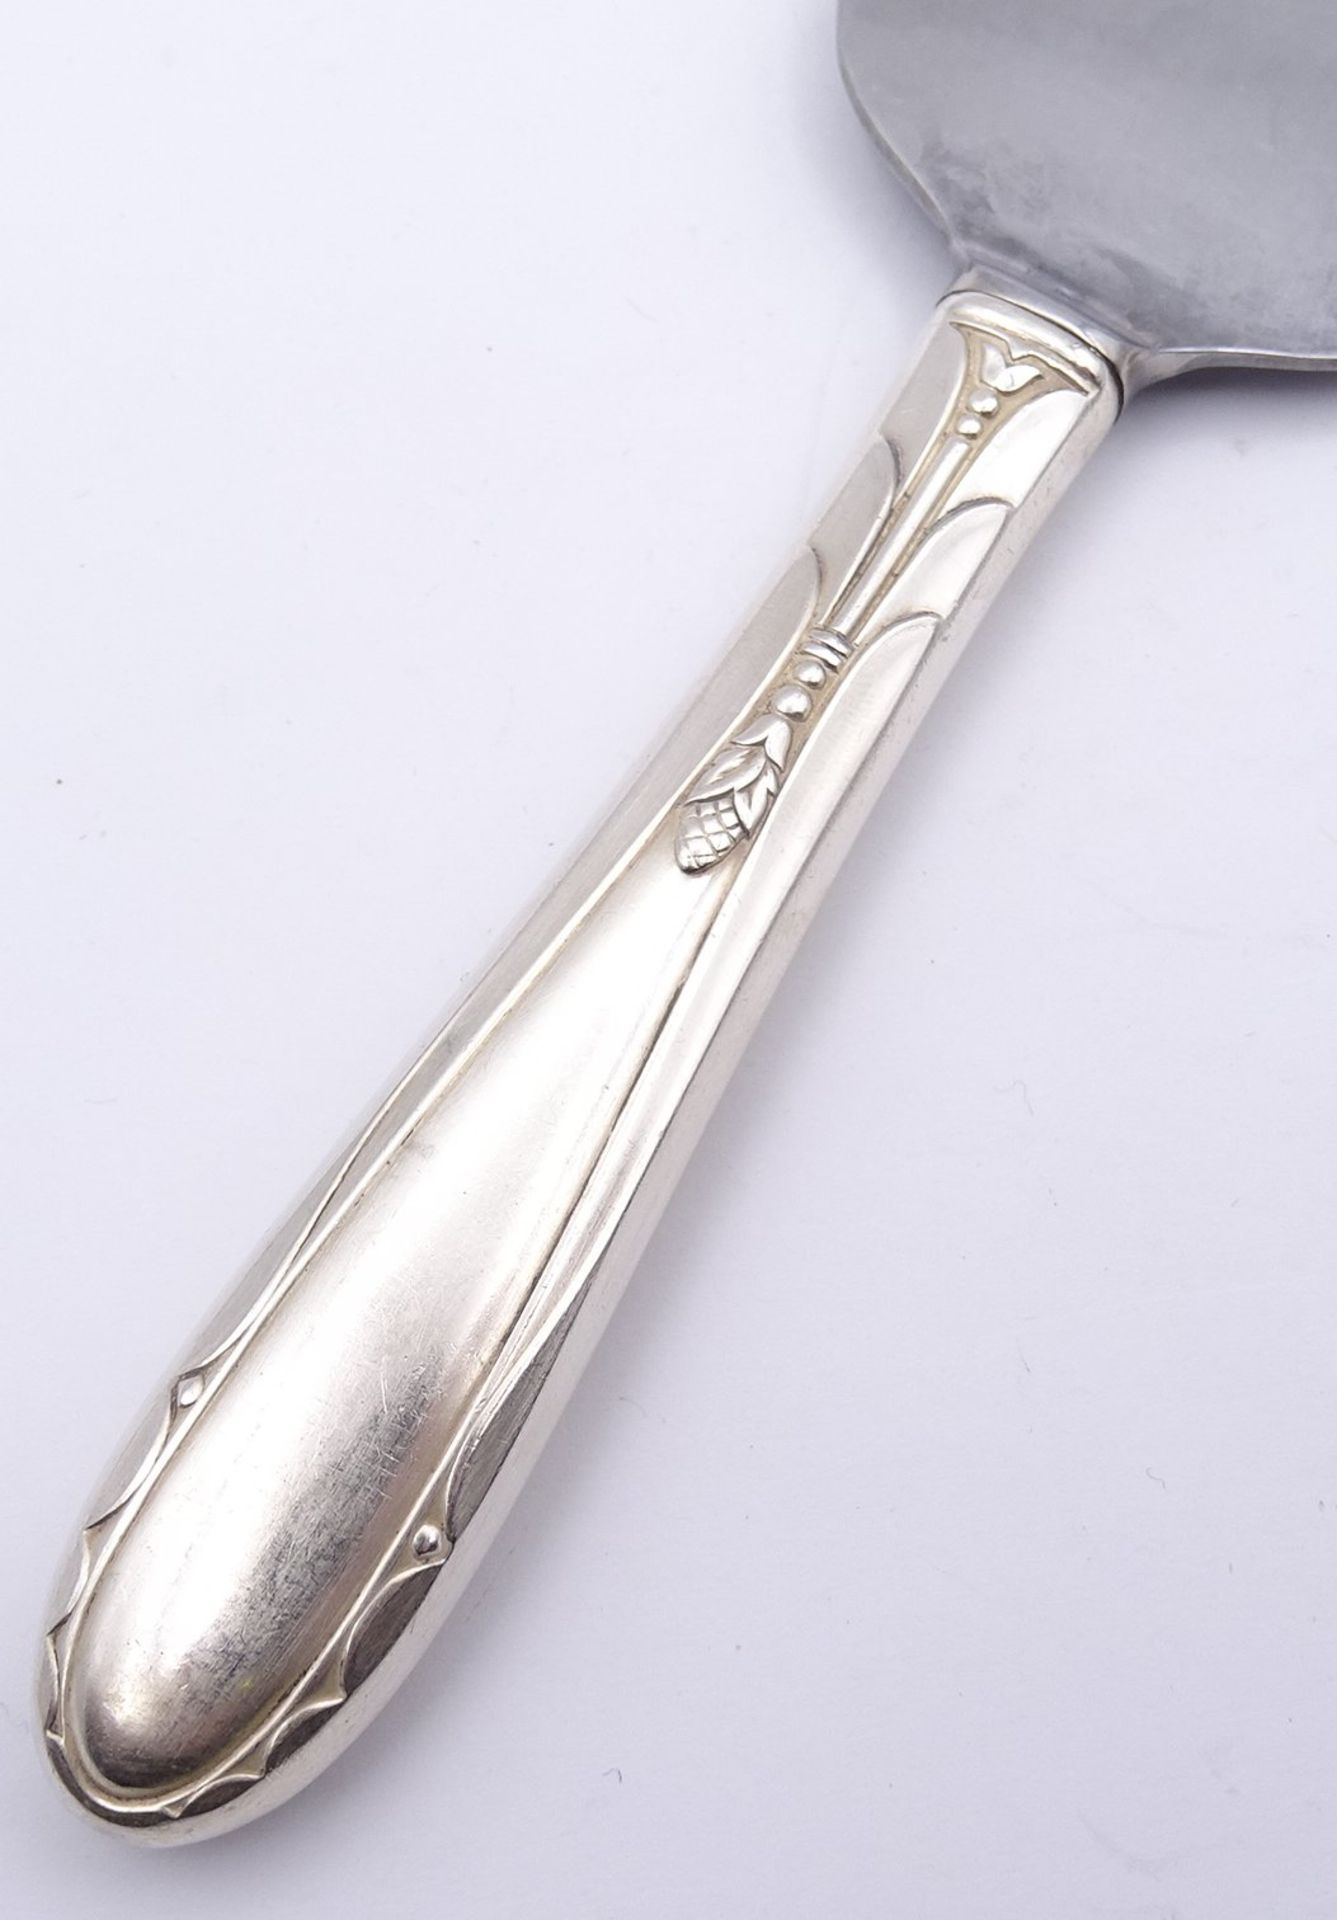 Kuchenheber mit Sterling Silber Griff, L. 25cm - Image 2 of 3